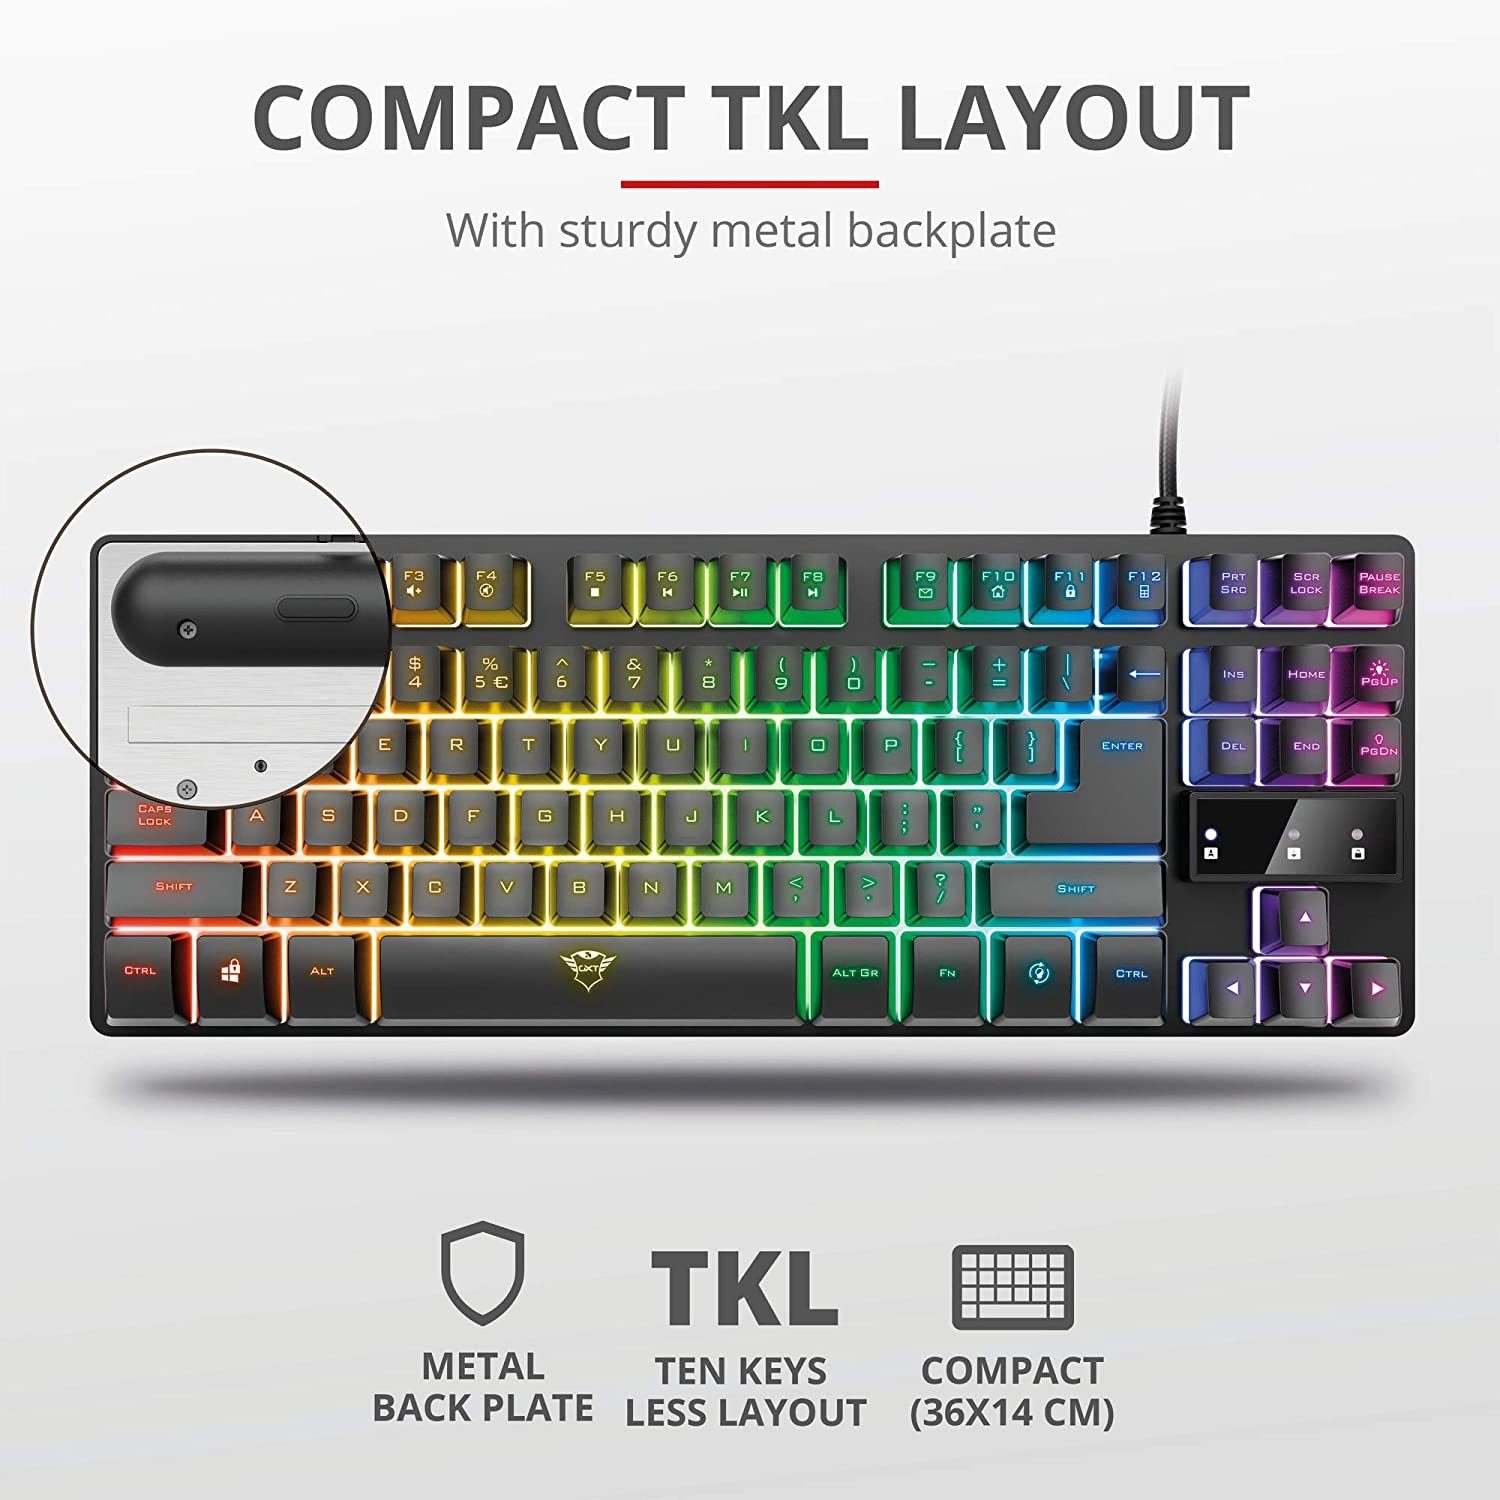 TKL DE Trust KEYBOARD Gaming-Tastatur GXT833 THADO